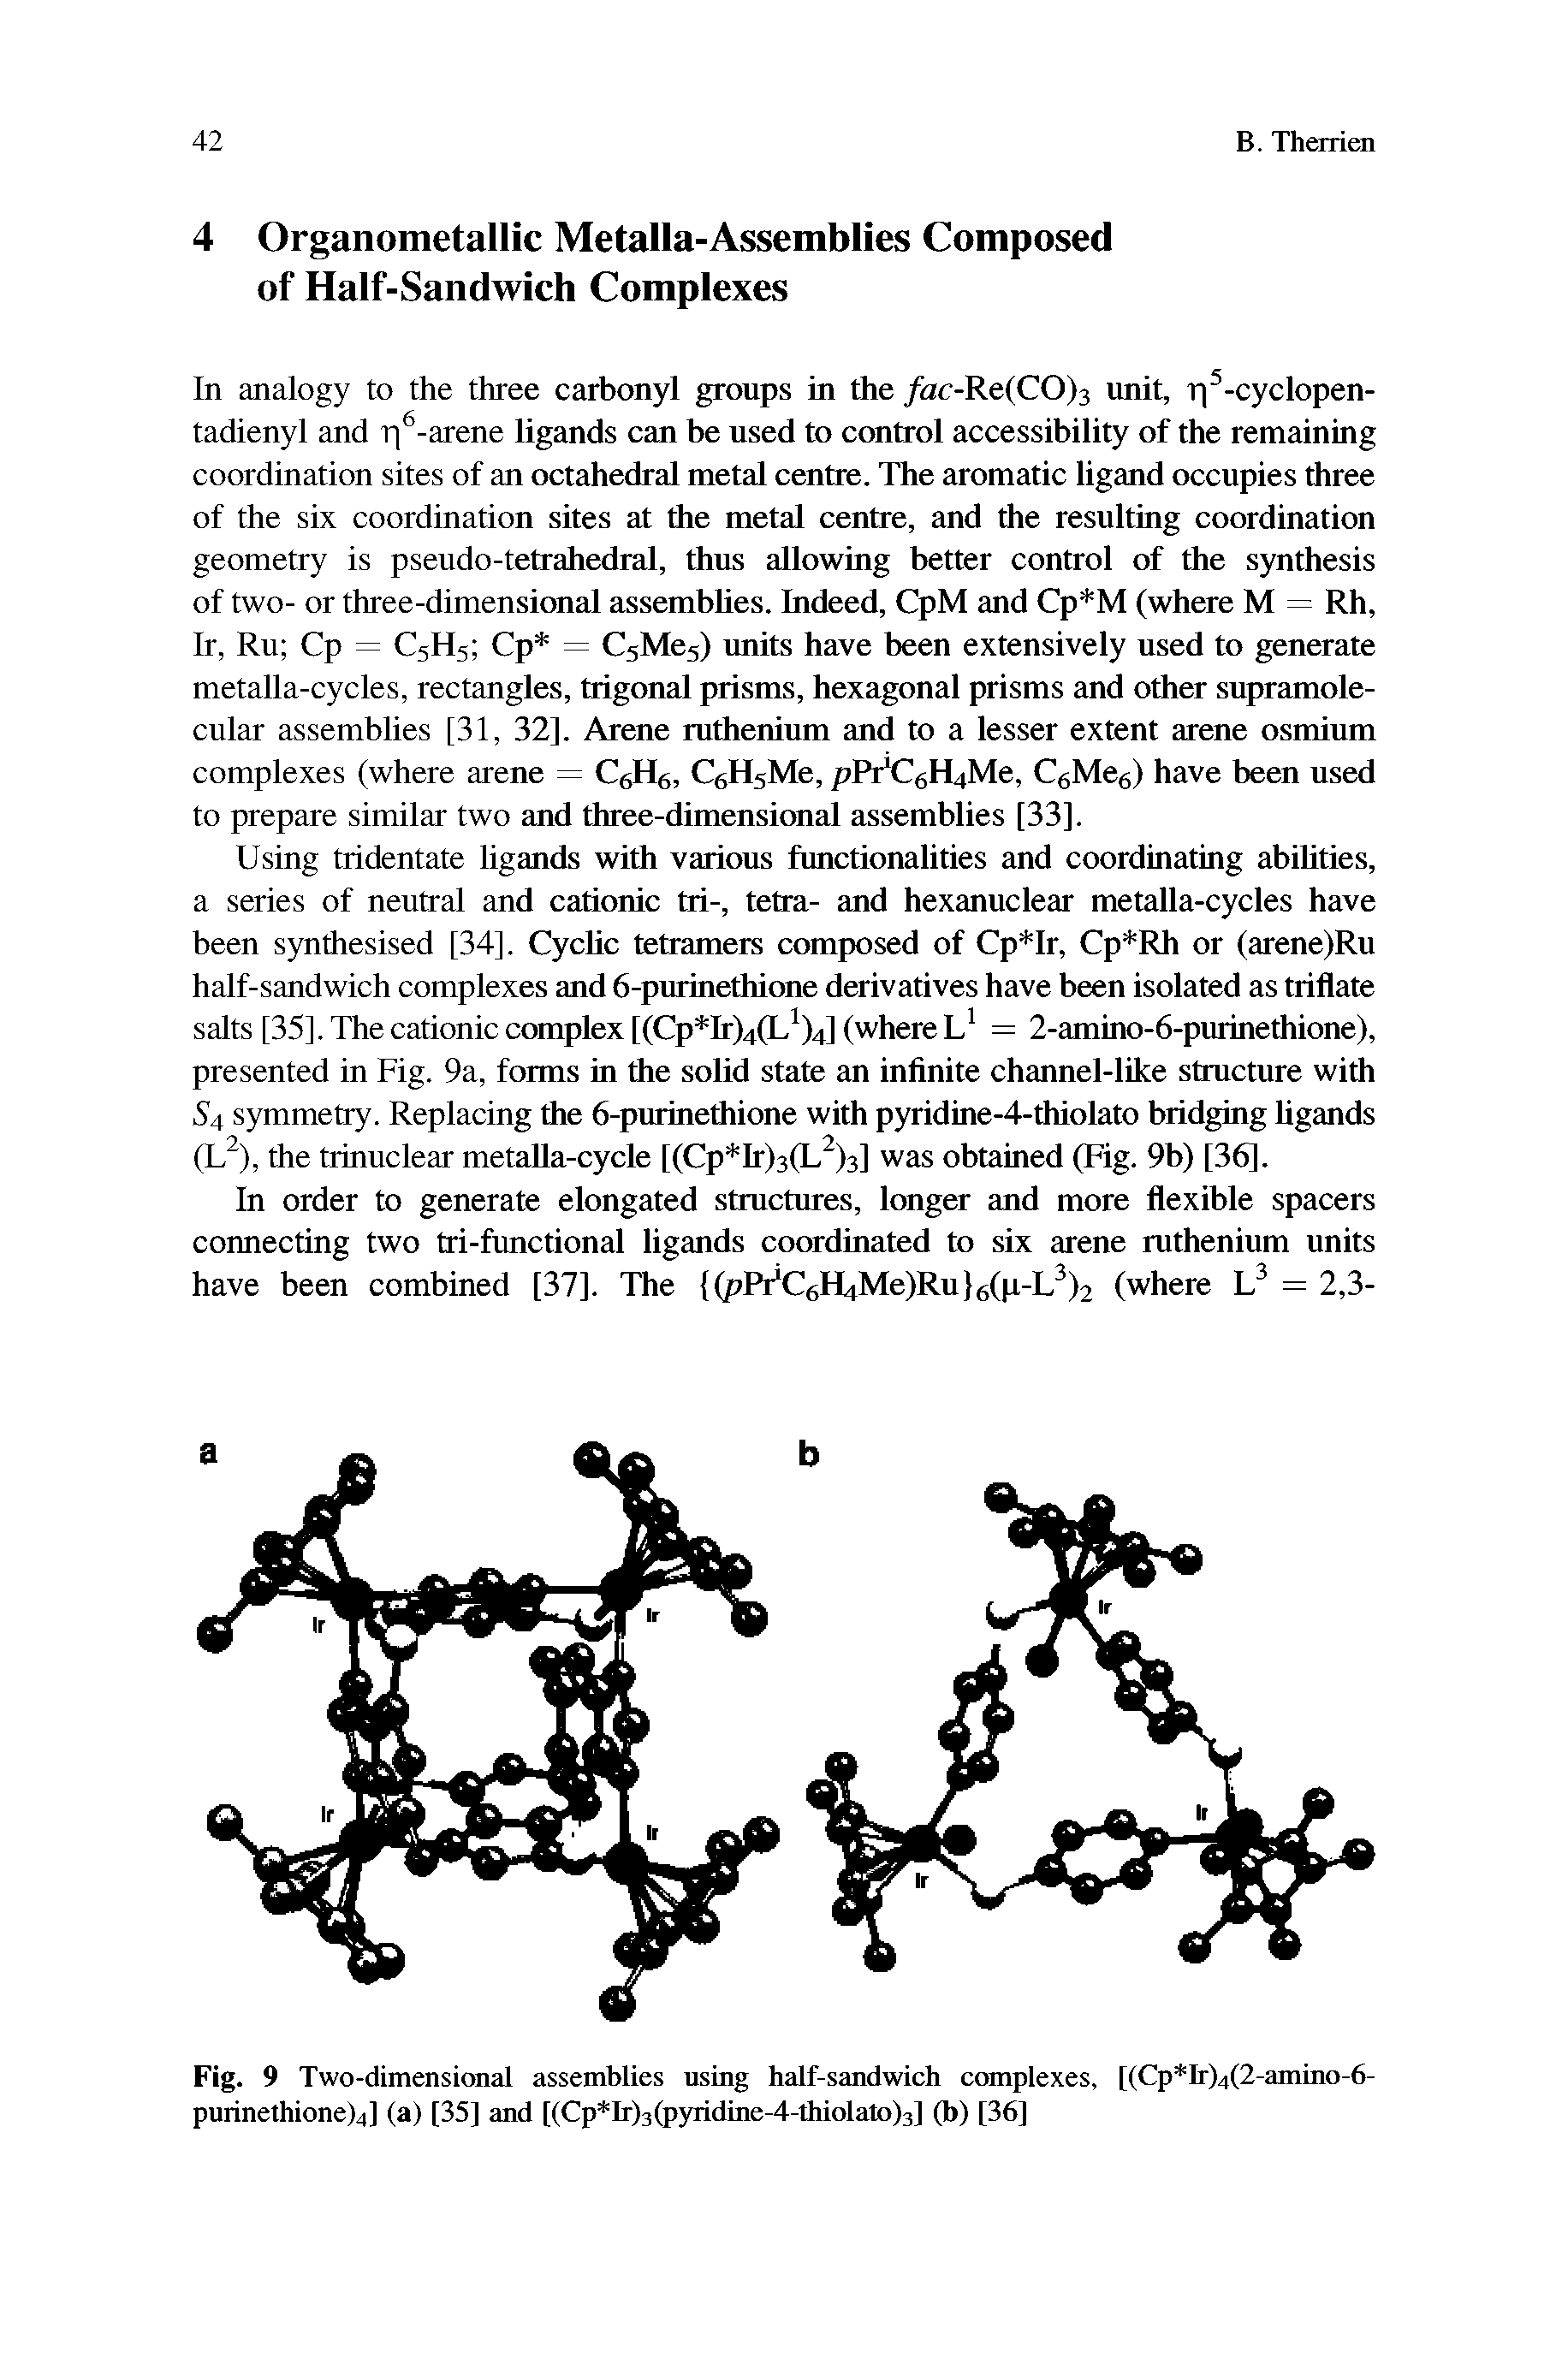 Fig. 9 Two-dimensional assemblies using half-sandwich complexes, [(Cp Ir)4(2-amino-6-purinethione)4] (a) [35] and [(Cp Ir)3(pyridine-4-thiolato)3] (b) [36]...